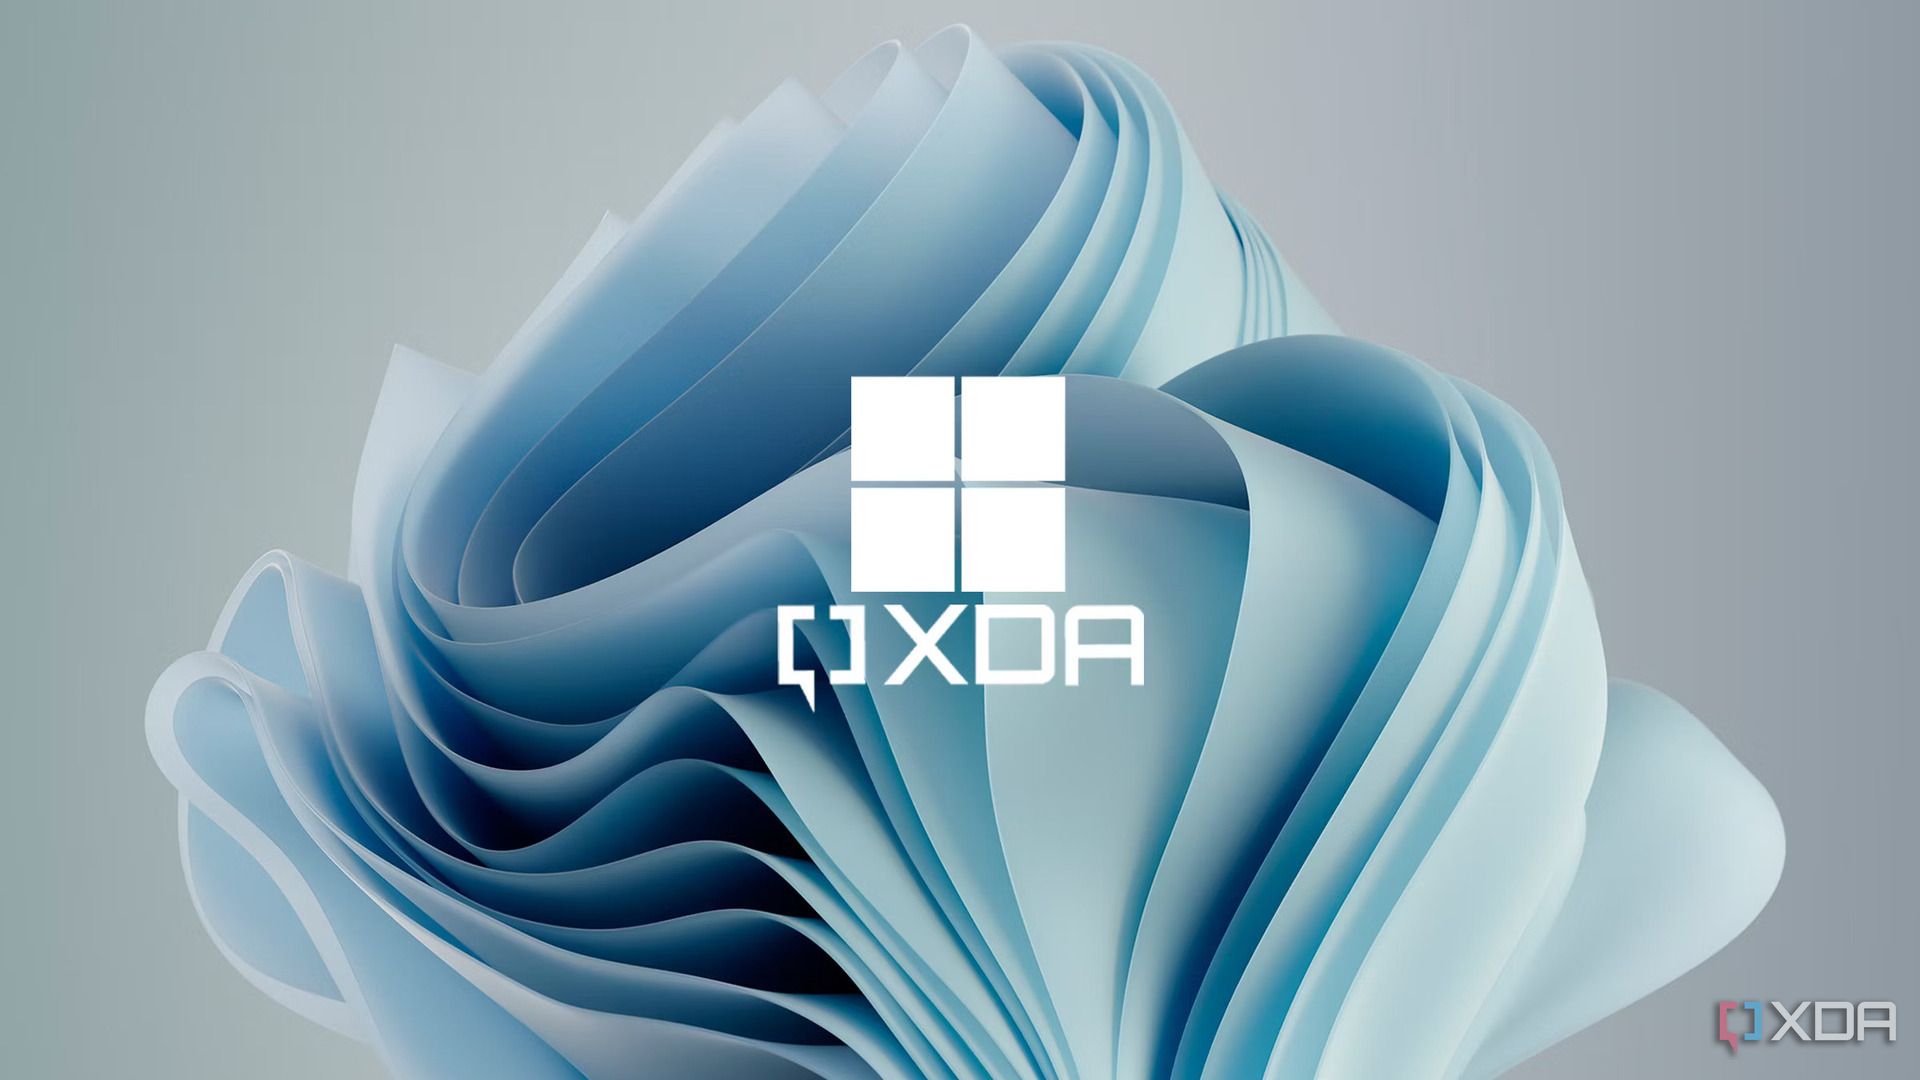 Windows 11 wallpaper with XDA watermark logo